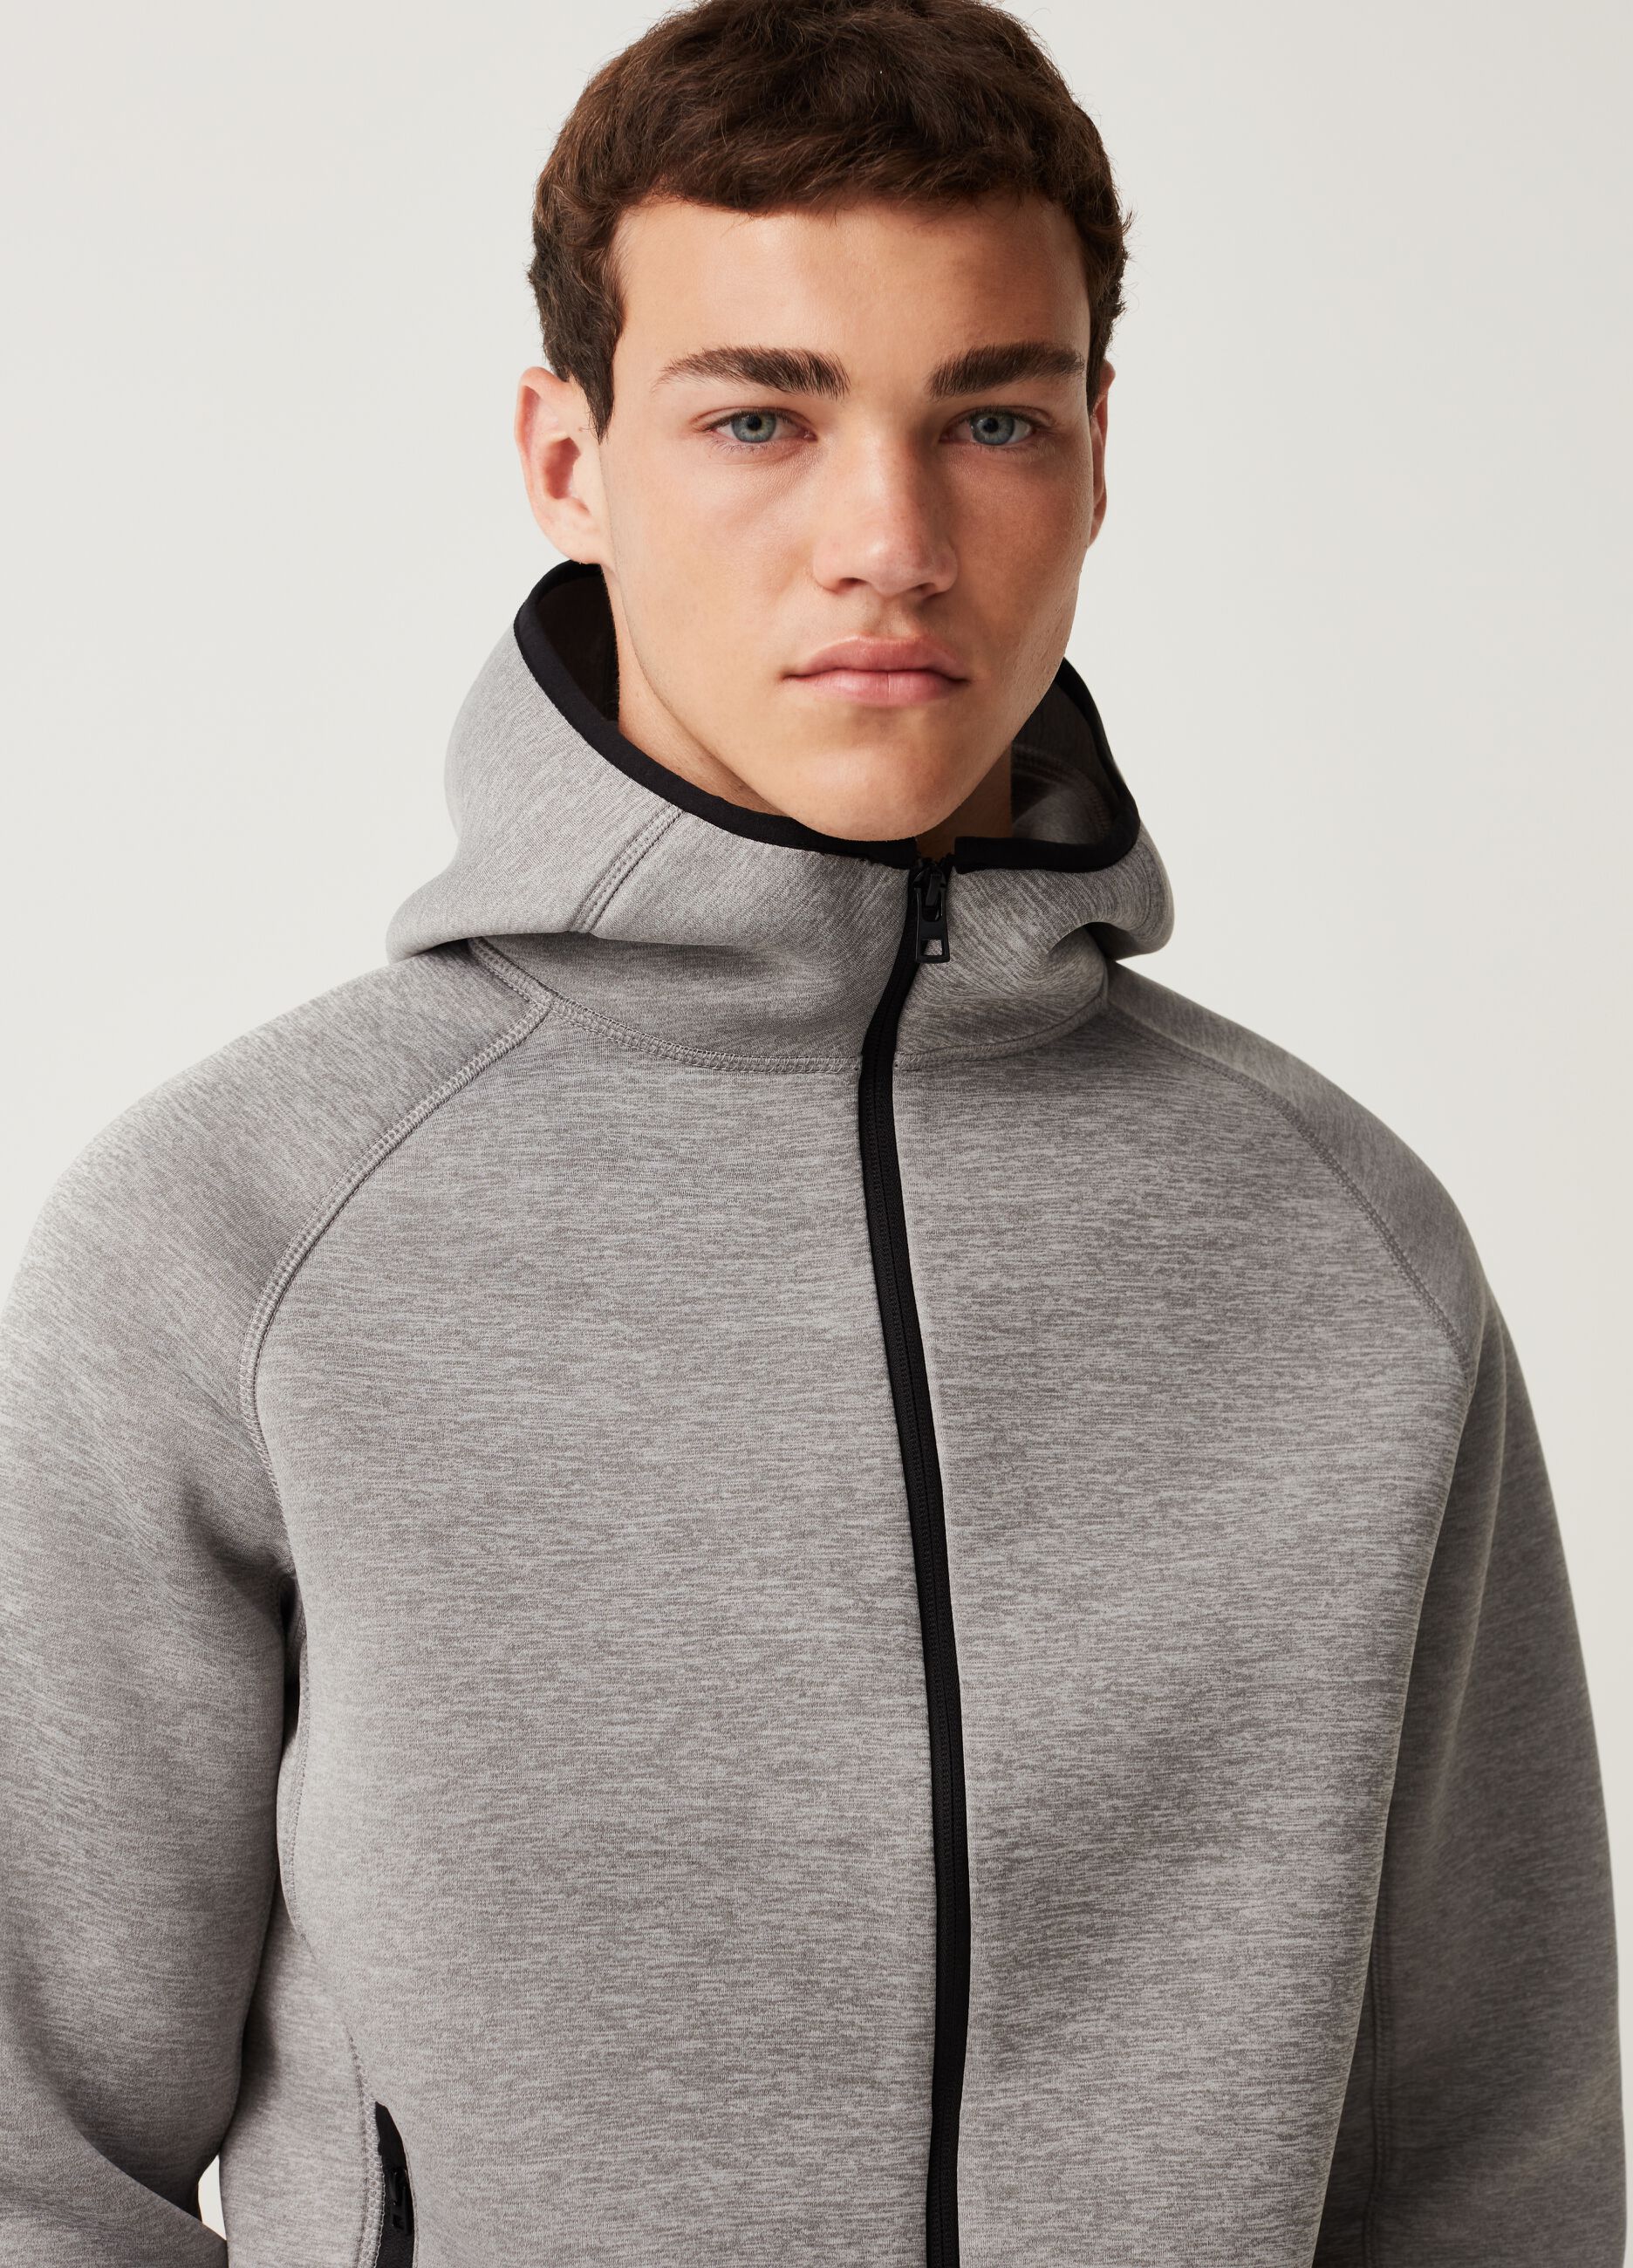 Full-zip sweatshirt with hood and raglan sleeves.